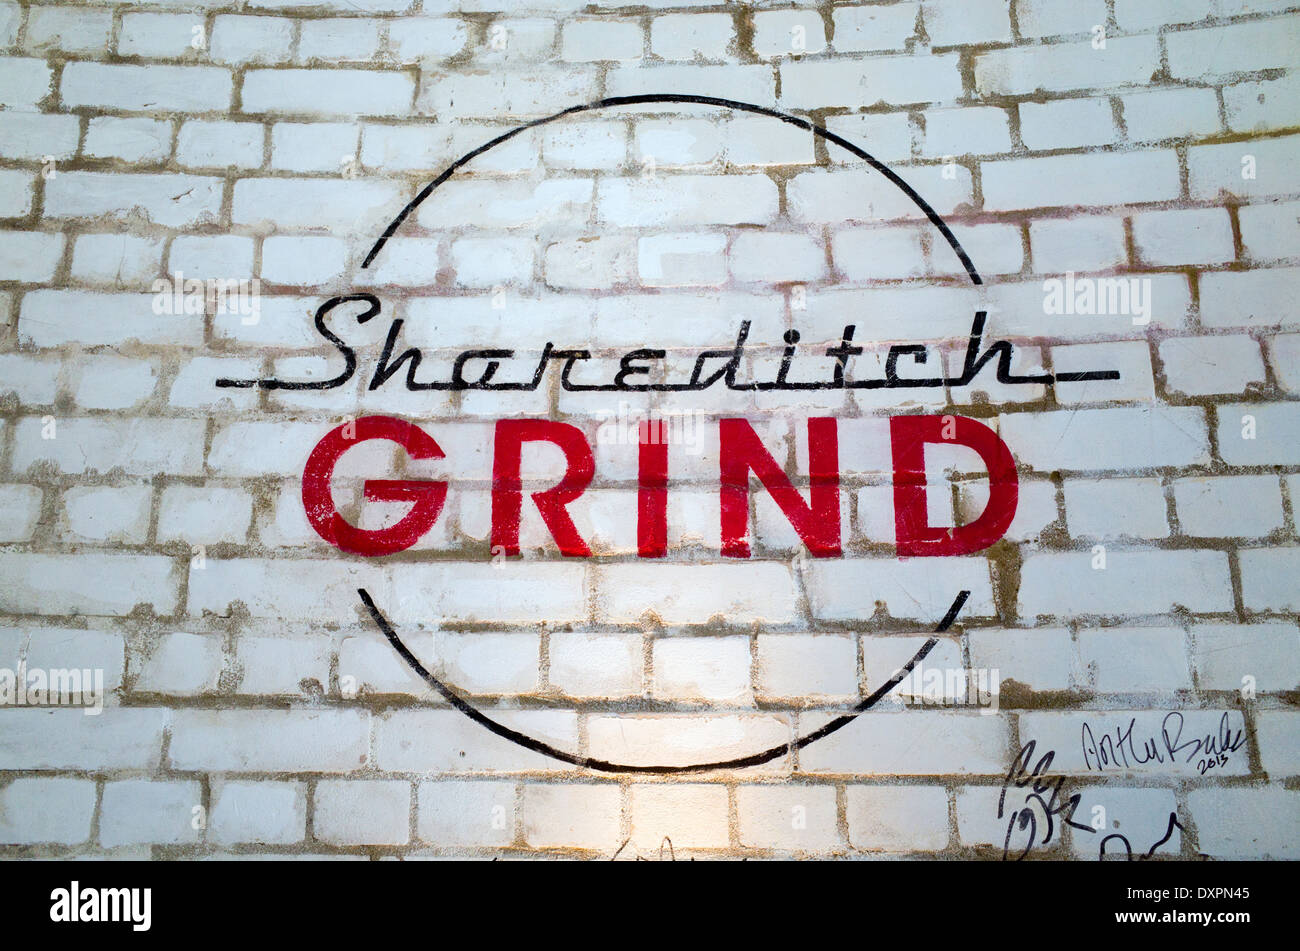 Shoreditch Grind Café am Kreisverkehr der Old Street, London, England, UK Stockfoto